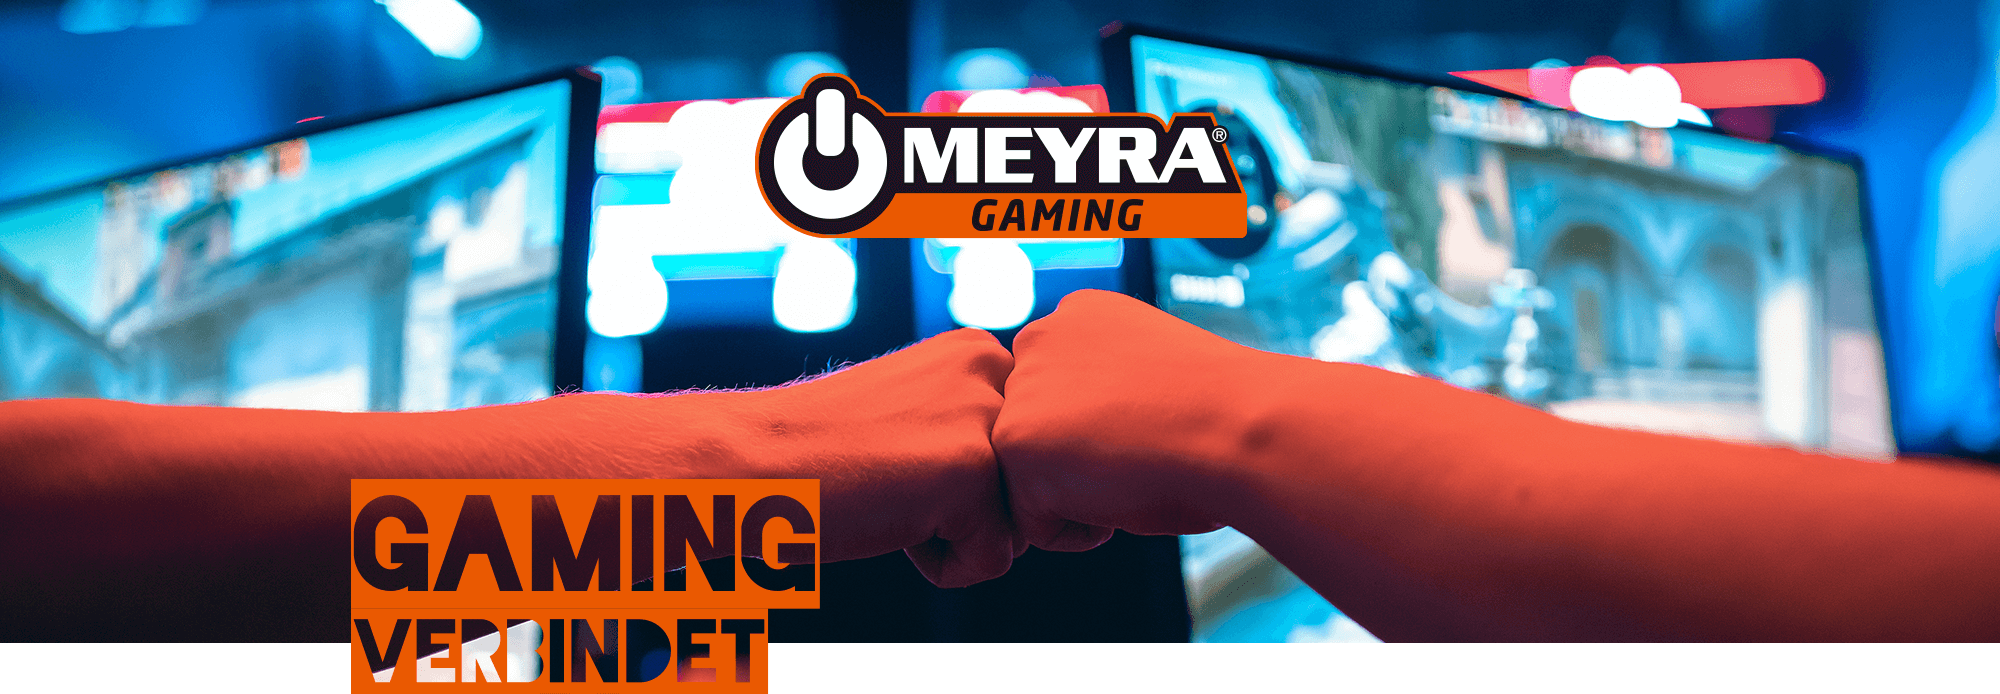 MEYRA Gaming